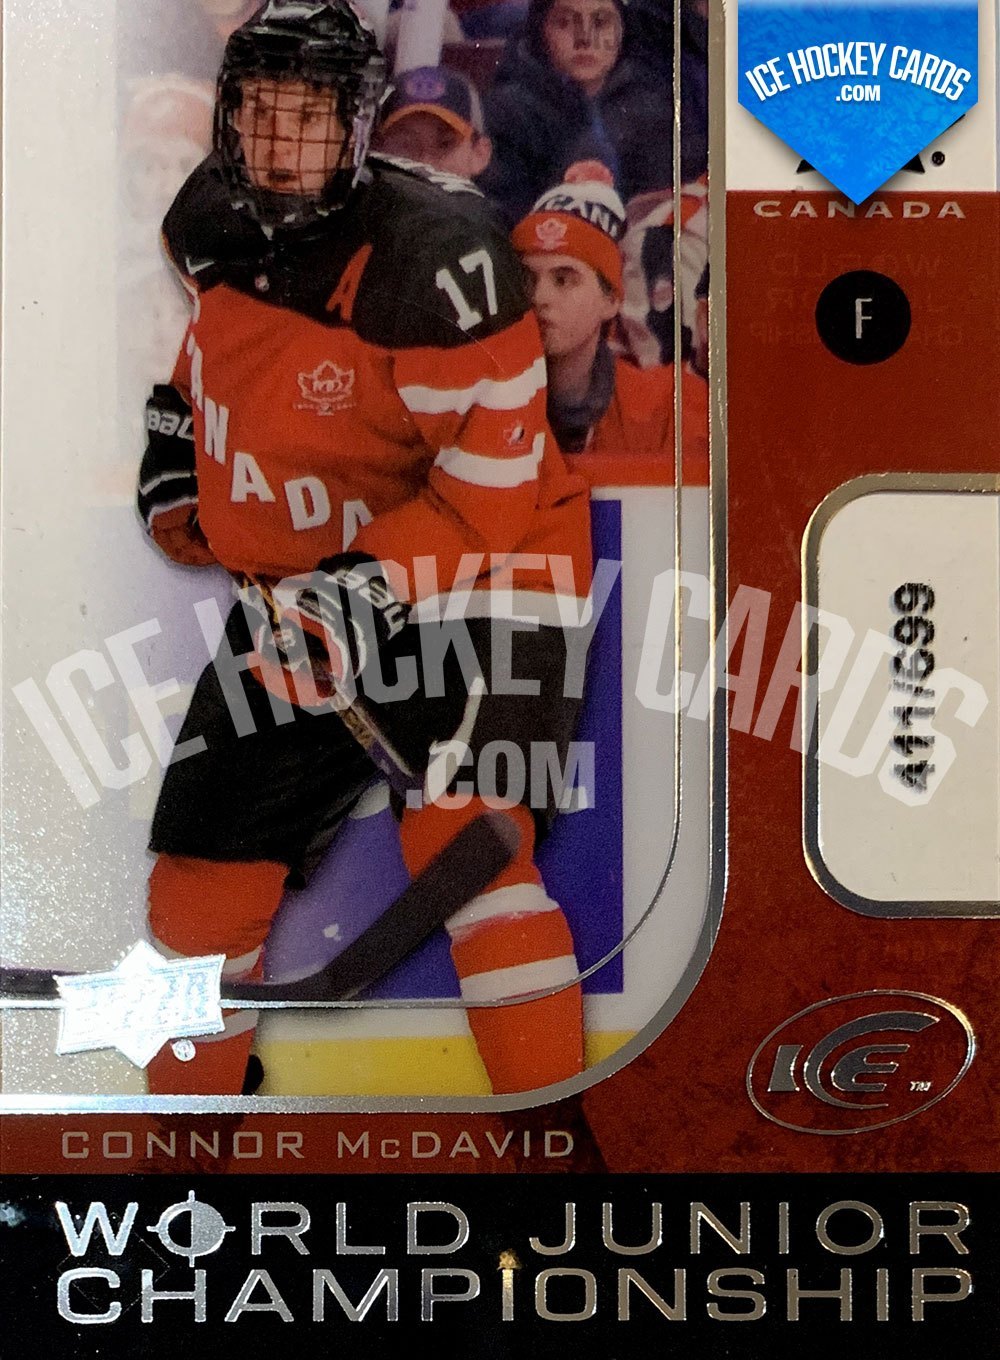 Upper Deck - ICE 2015-16 - Connor McDavid World Junior Championship Team Canada - NHL rookie year hockey card!